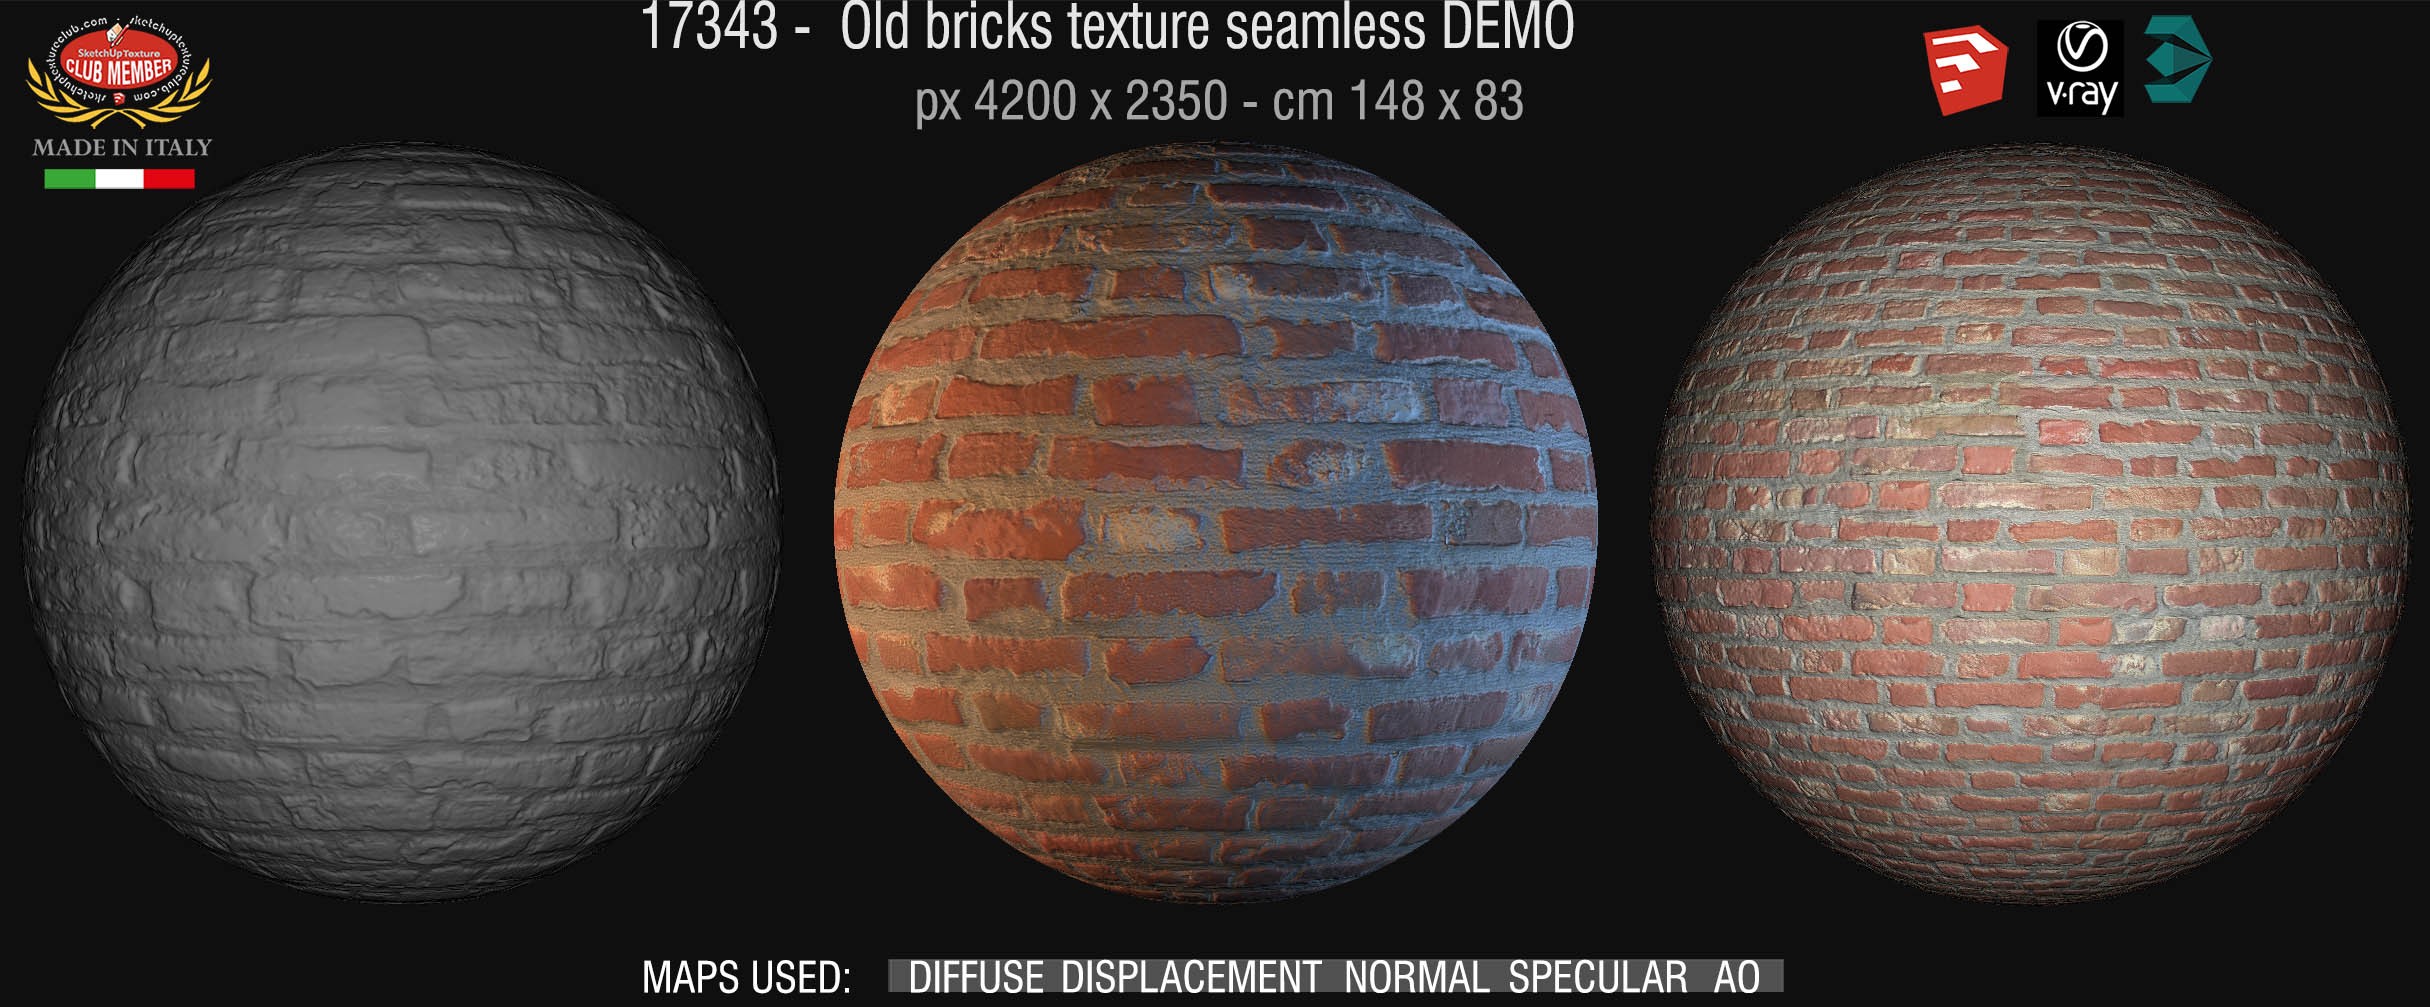 17343 Old bricks texture seamless + maps DEMO